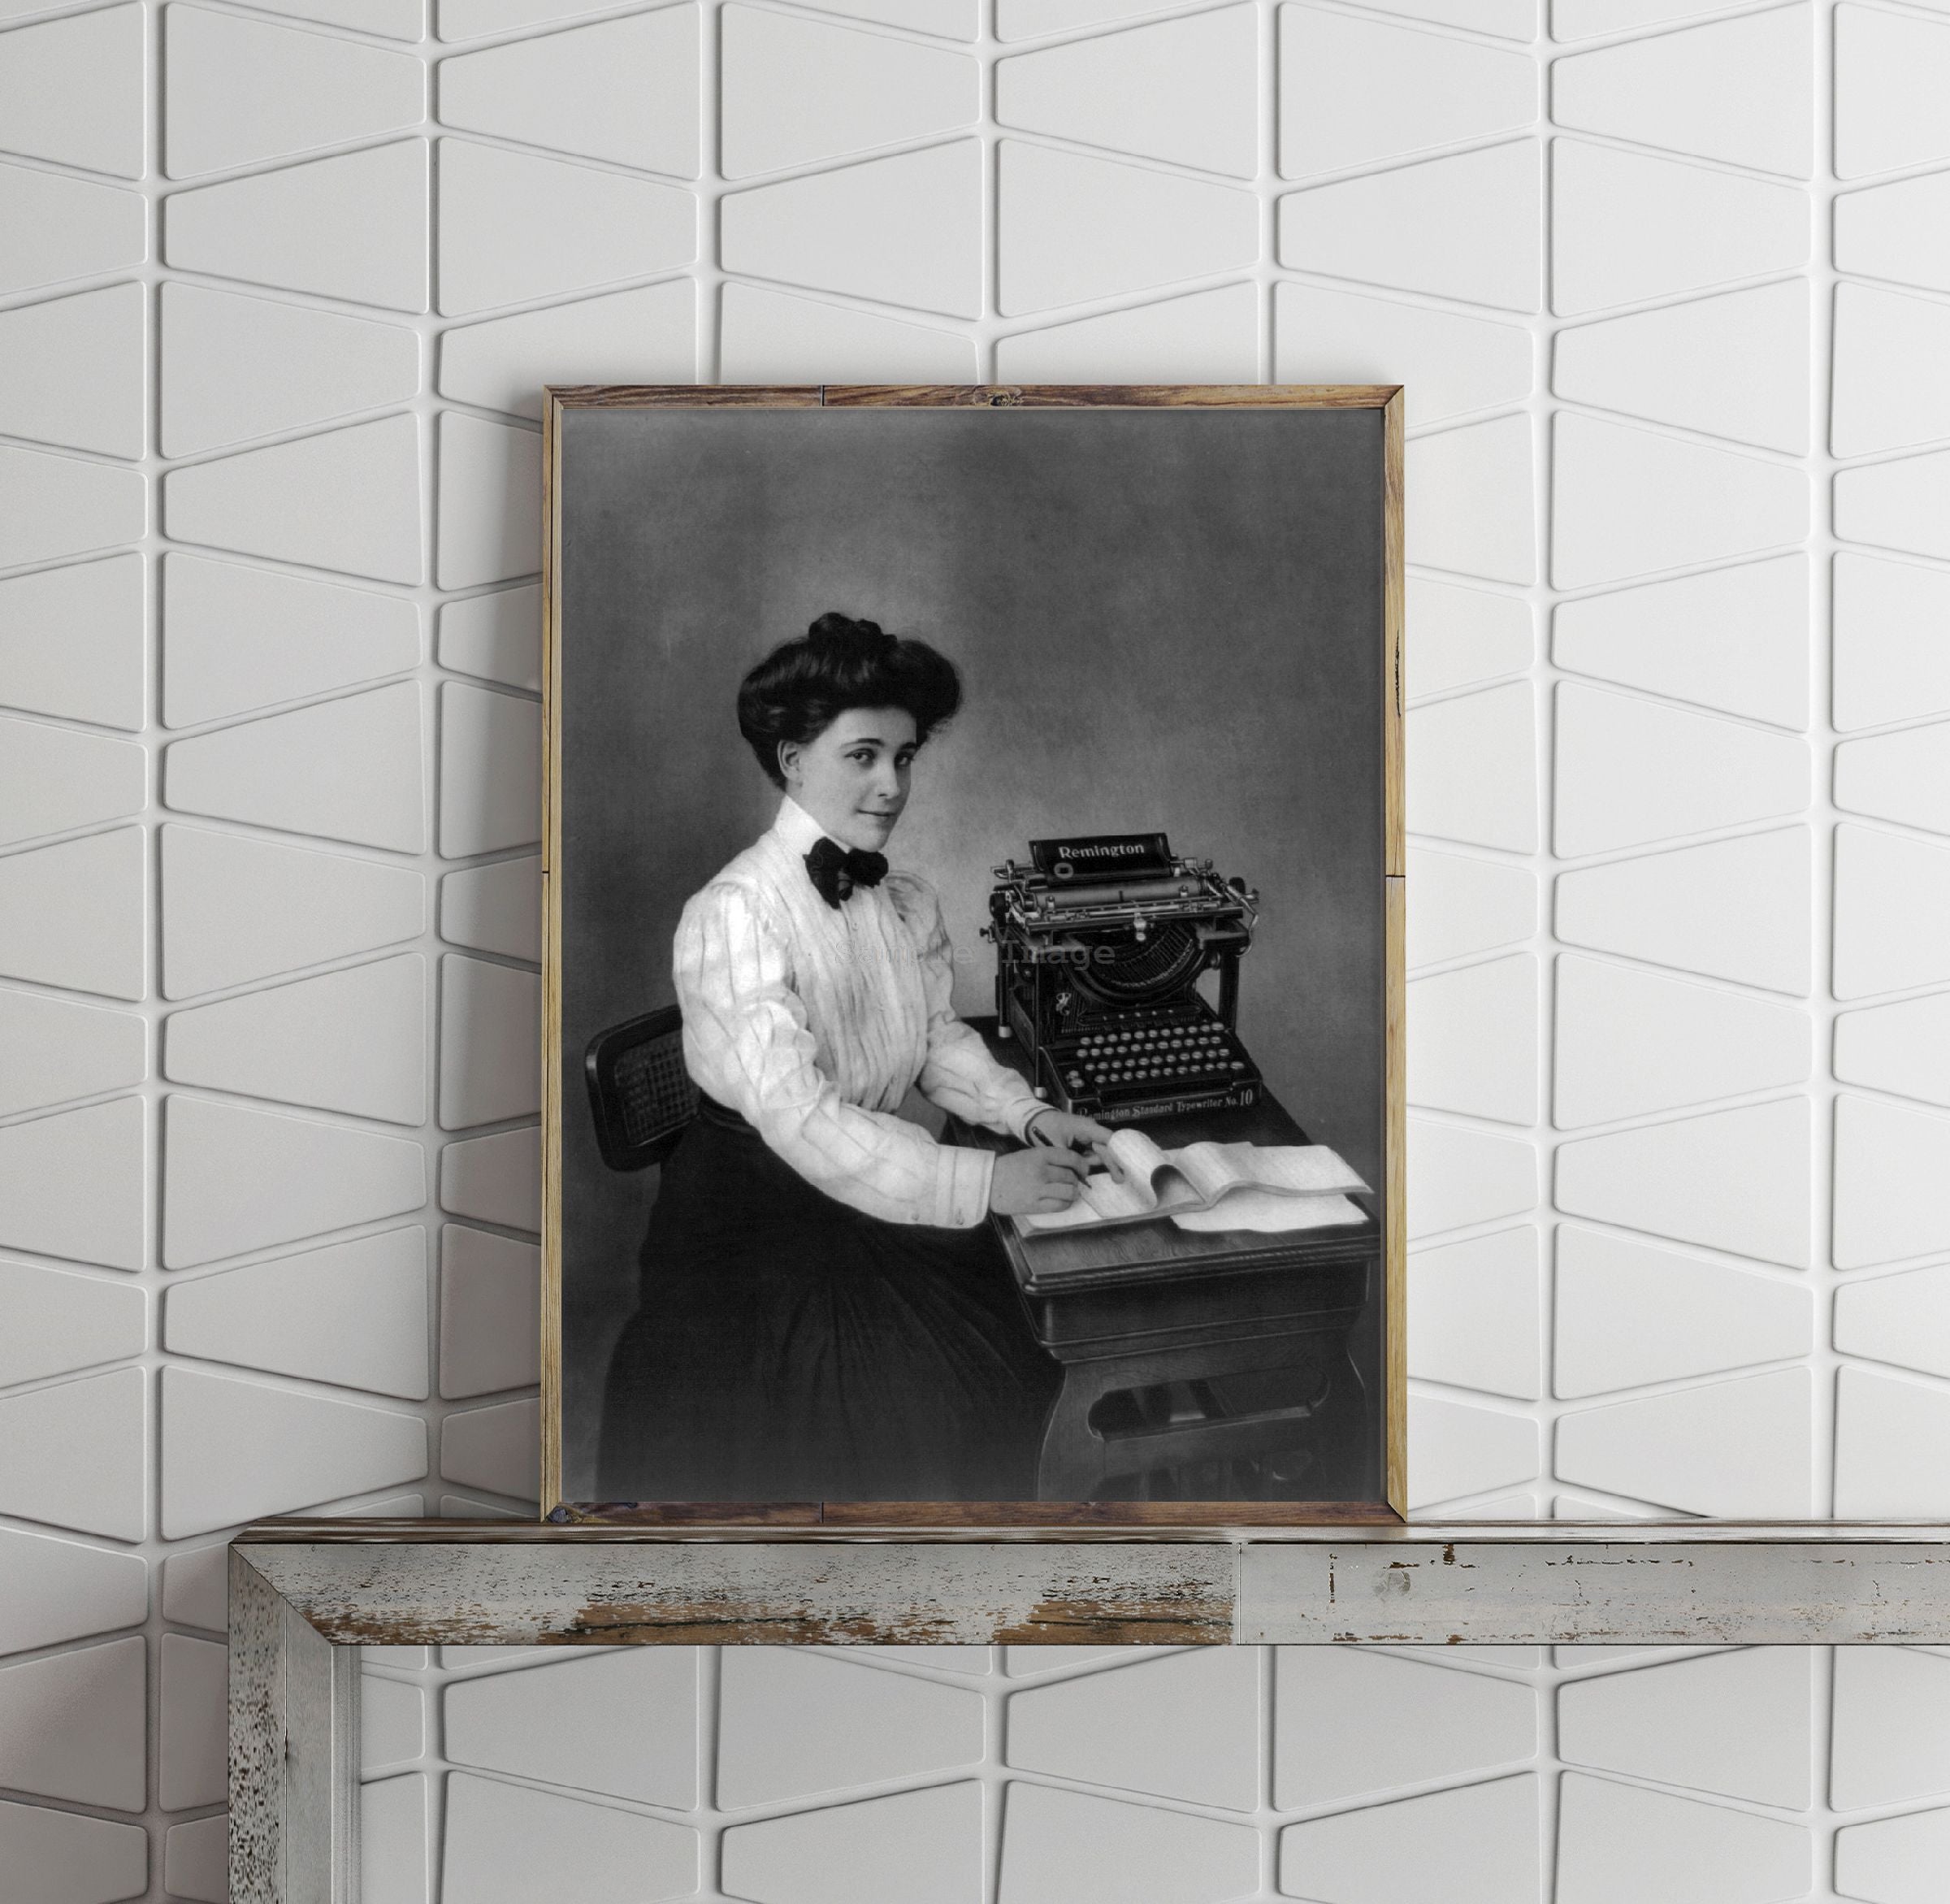 Photo: Miss Remington, Woman sitting at desk, Typewriter, Office Worker, Employment,